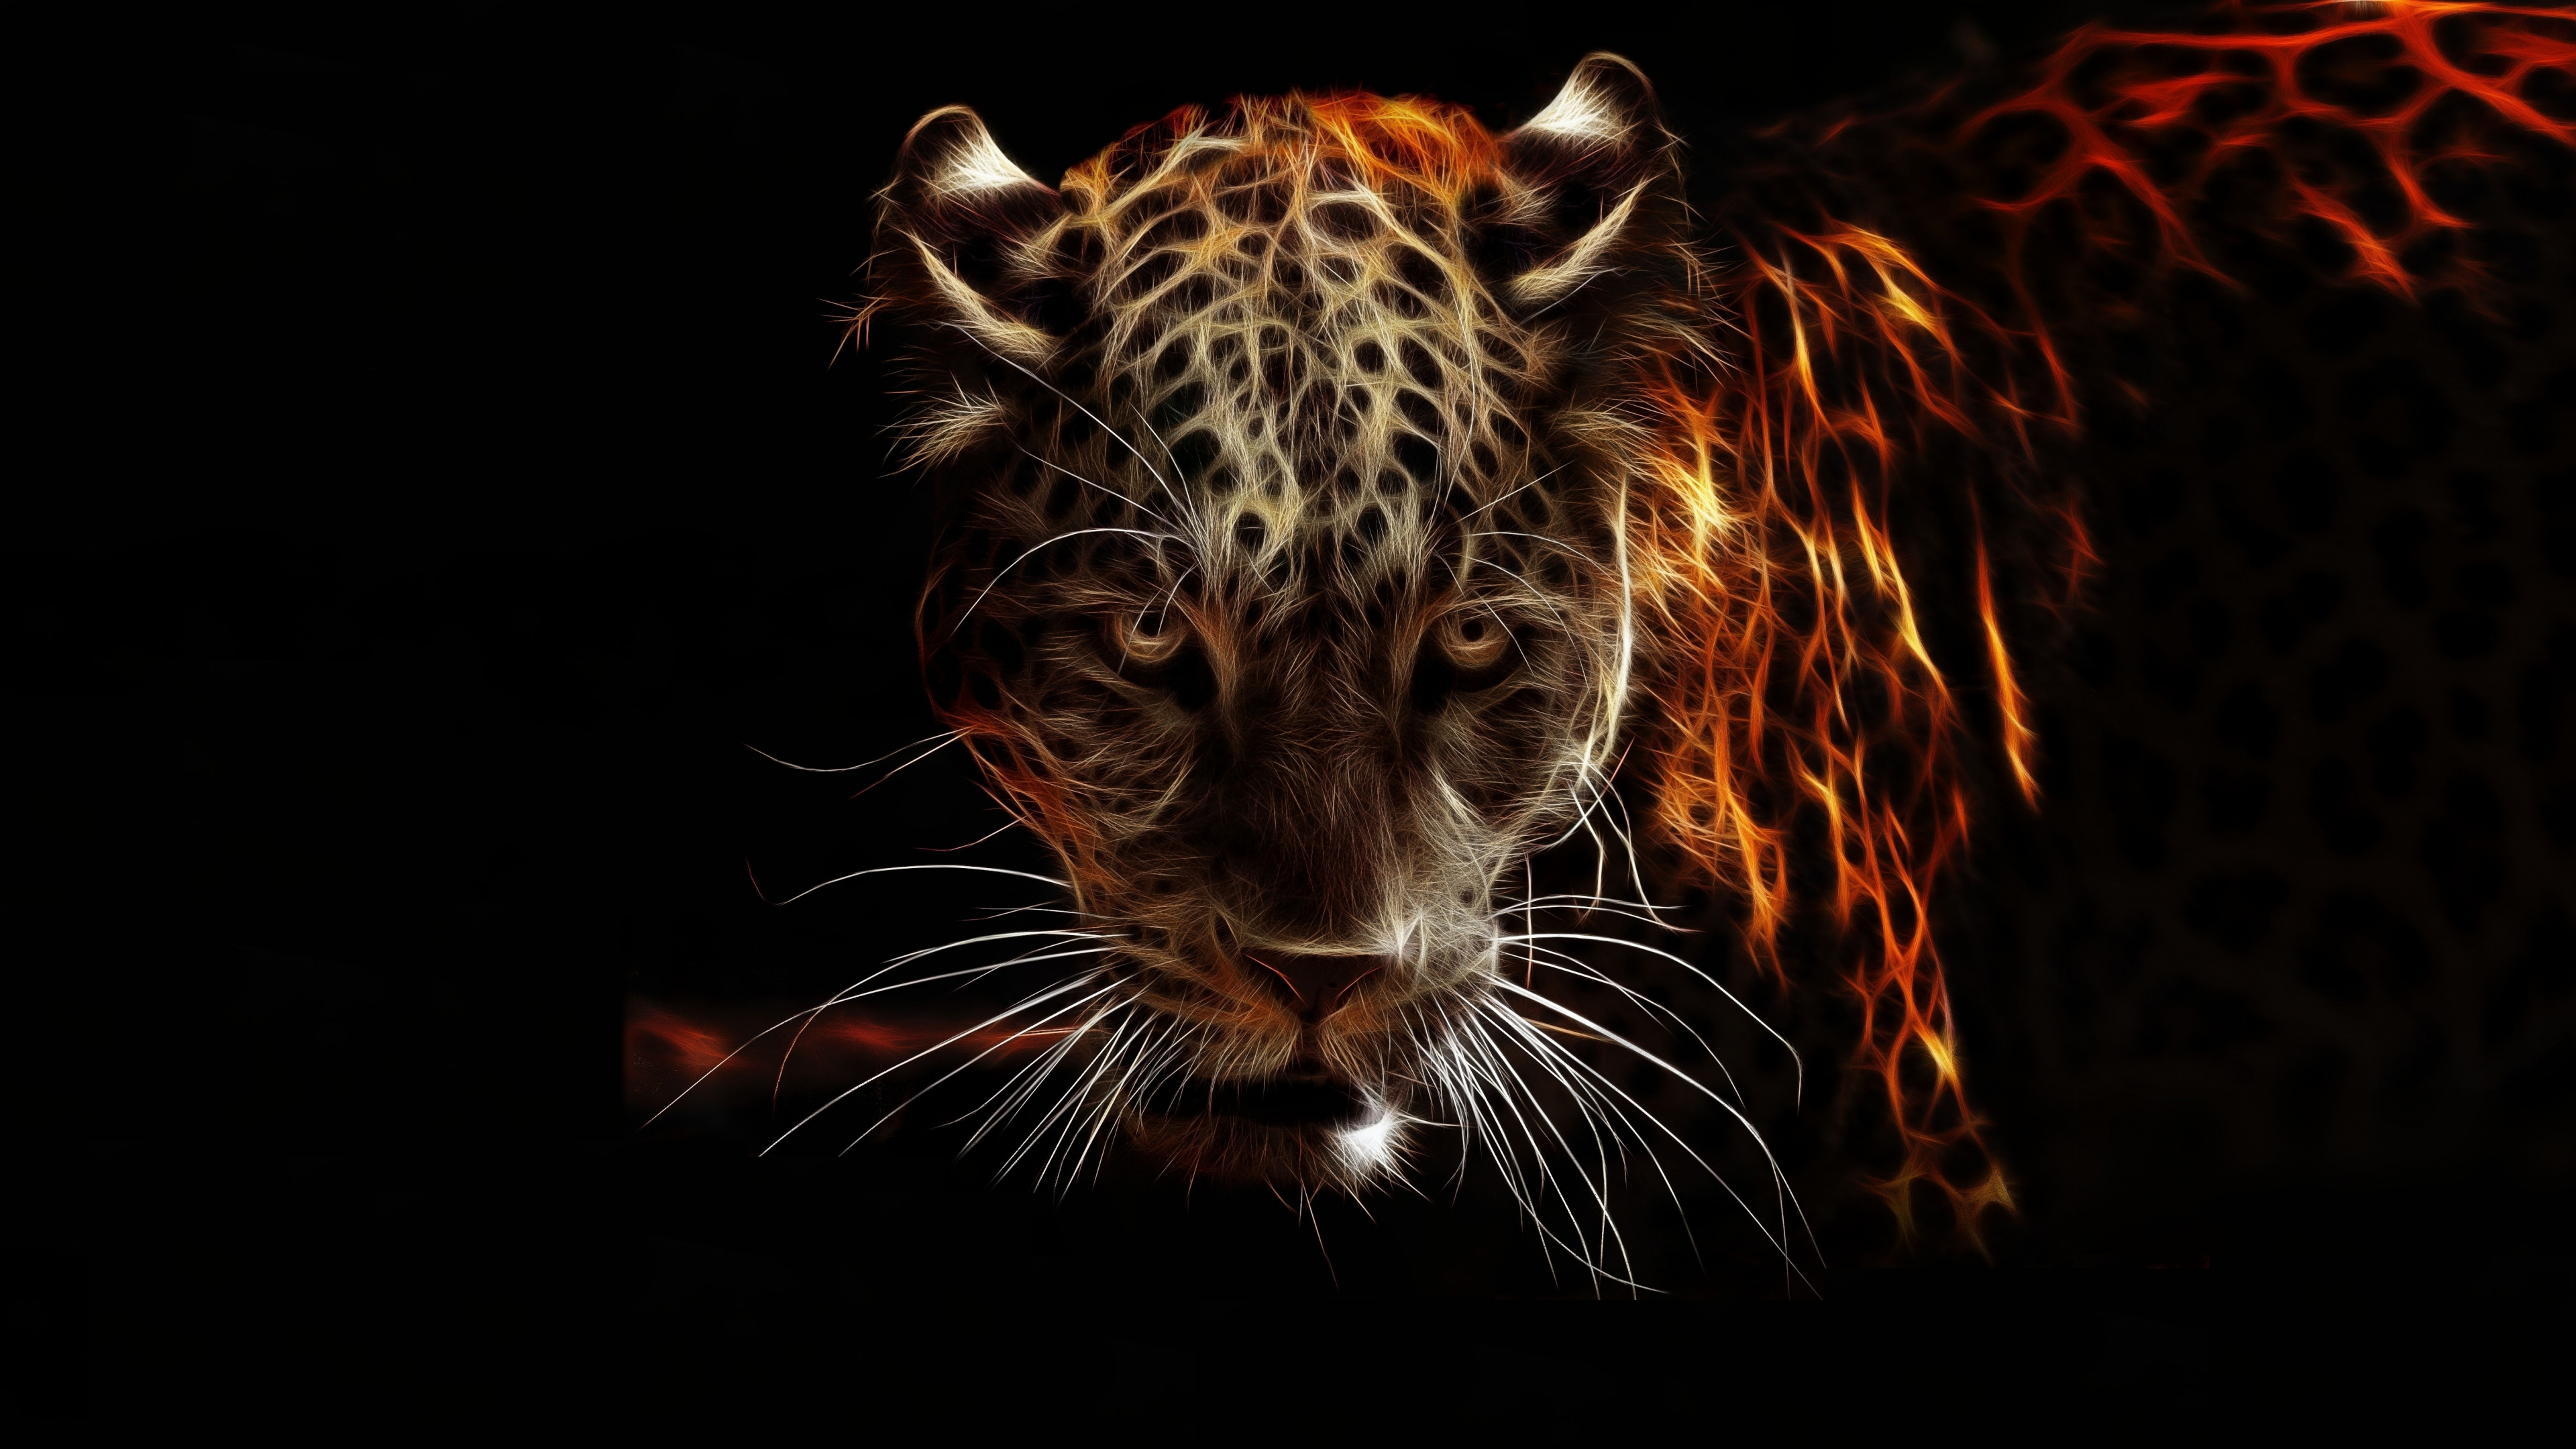 Download wallpaper 3840x2160 jaguar, animal, wildlife, artwork 4k wallpaper,  uhd wallpaper, 16:9 widescreen 3840x2160 hd background, 9666